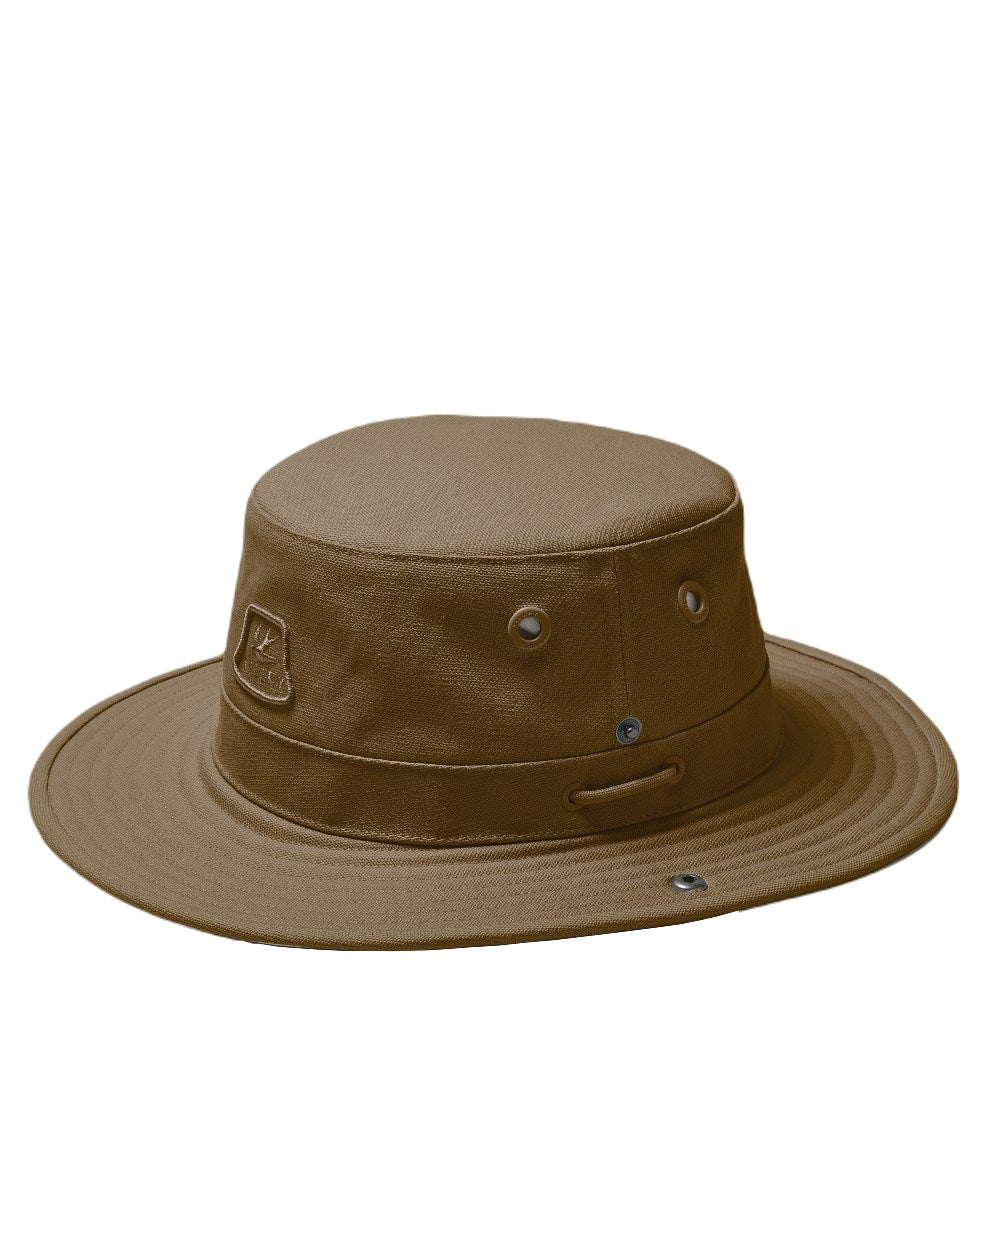 Dark Khaki Coloured Tilley Hat Sahara T3 On A White Background 